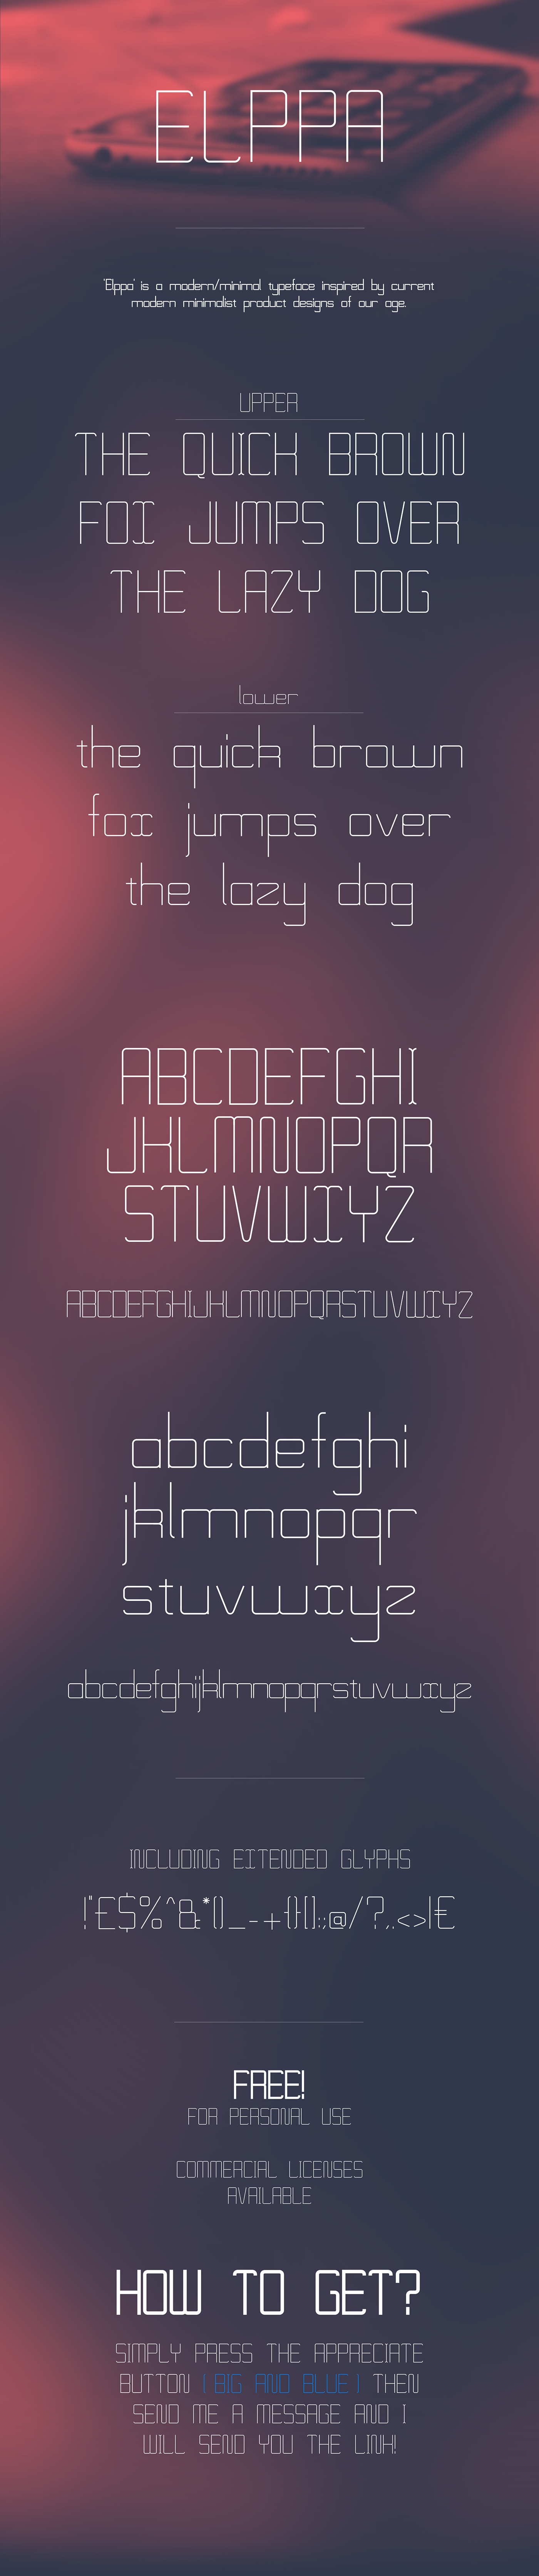 Free font font Typeface free new apple iphone macbook pro Adam adamrobinson download modern san serif minimalist